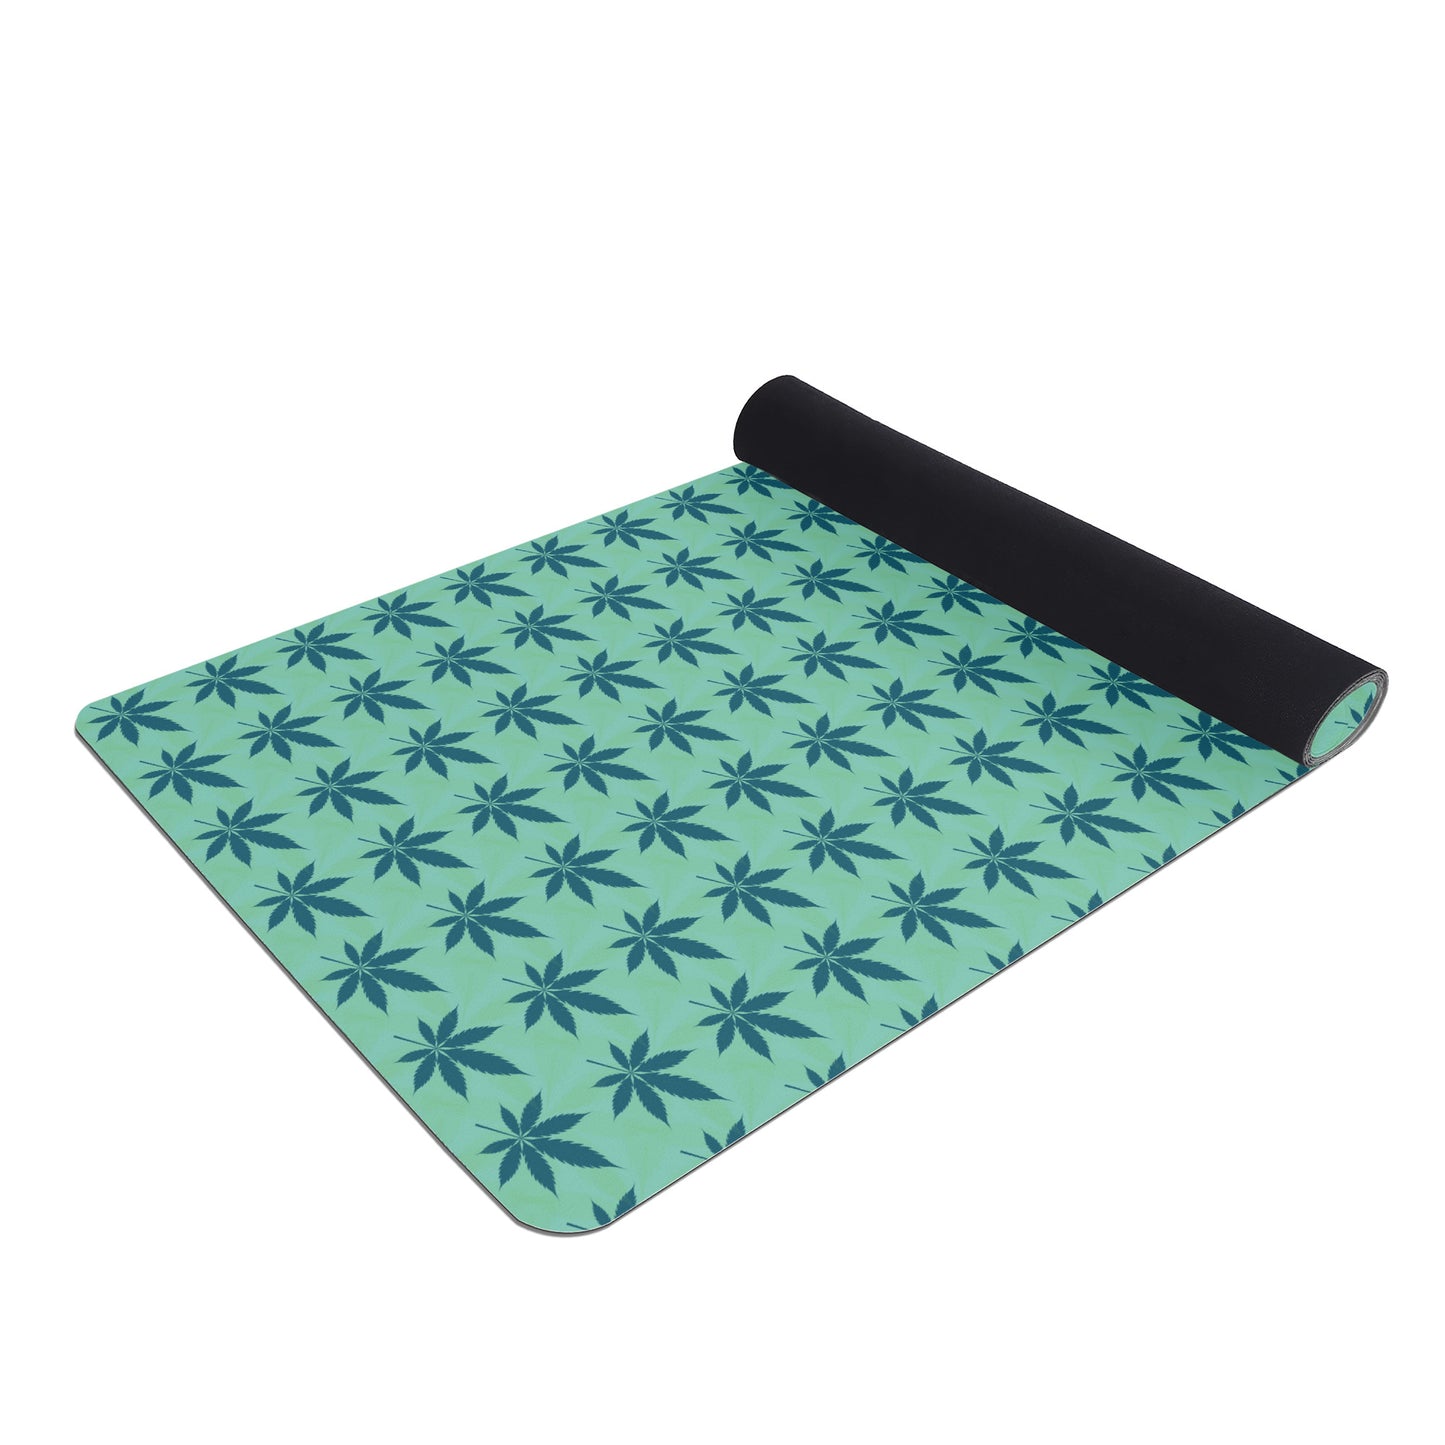 Green Yoga Mat